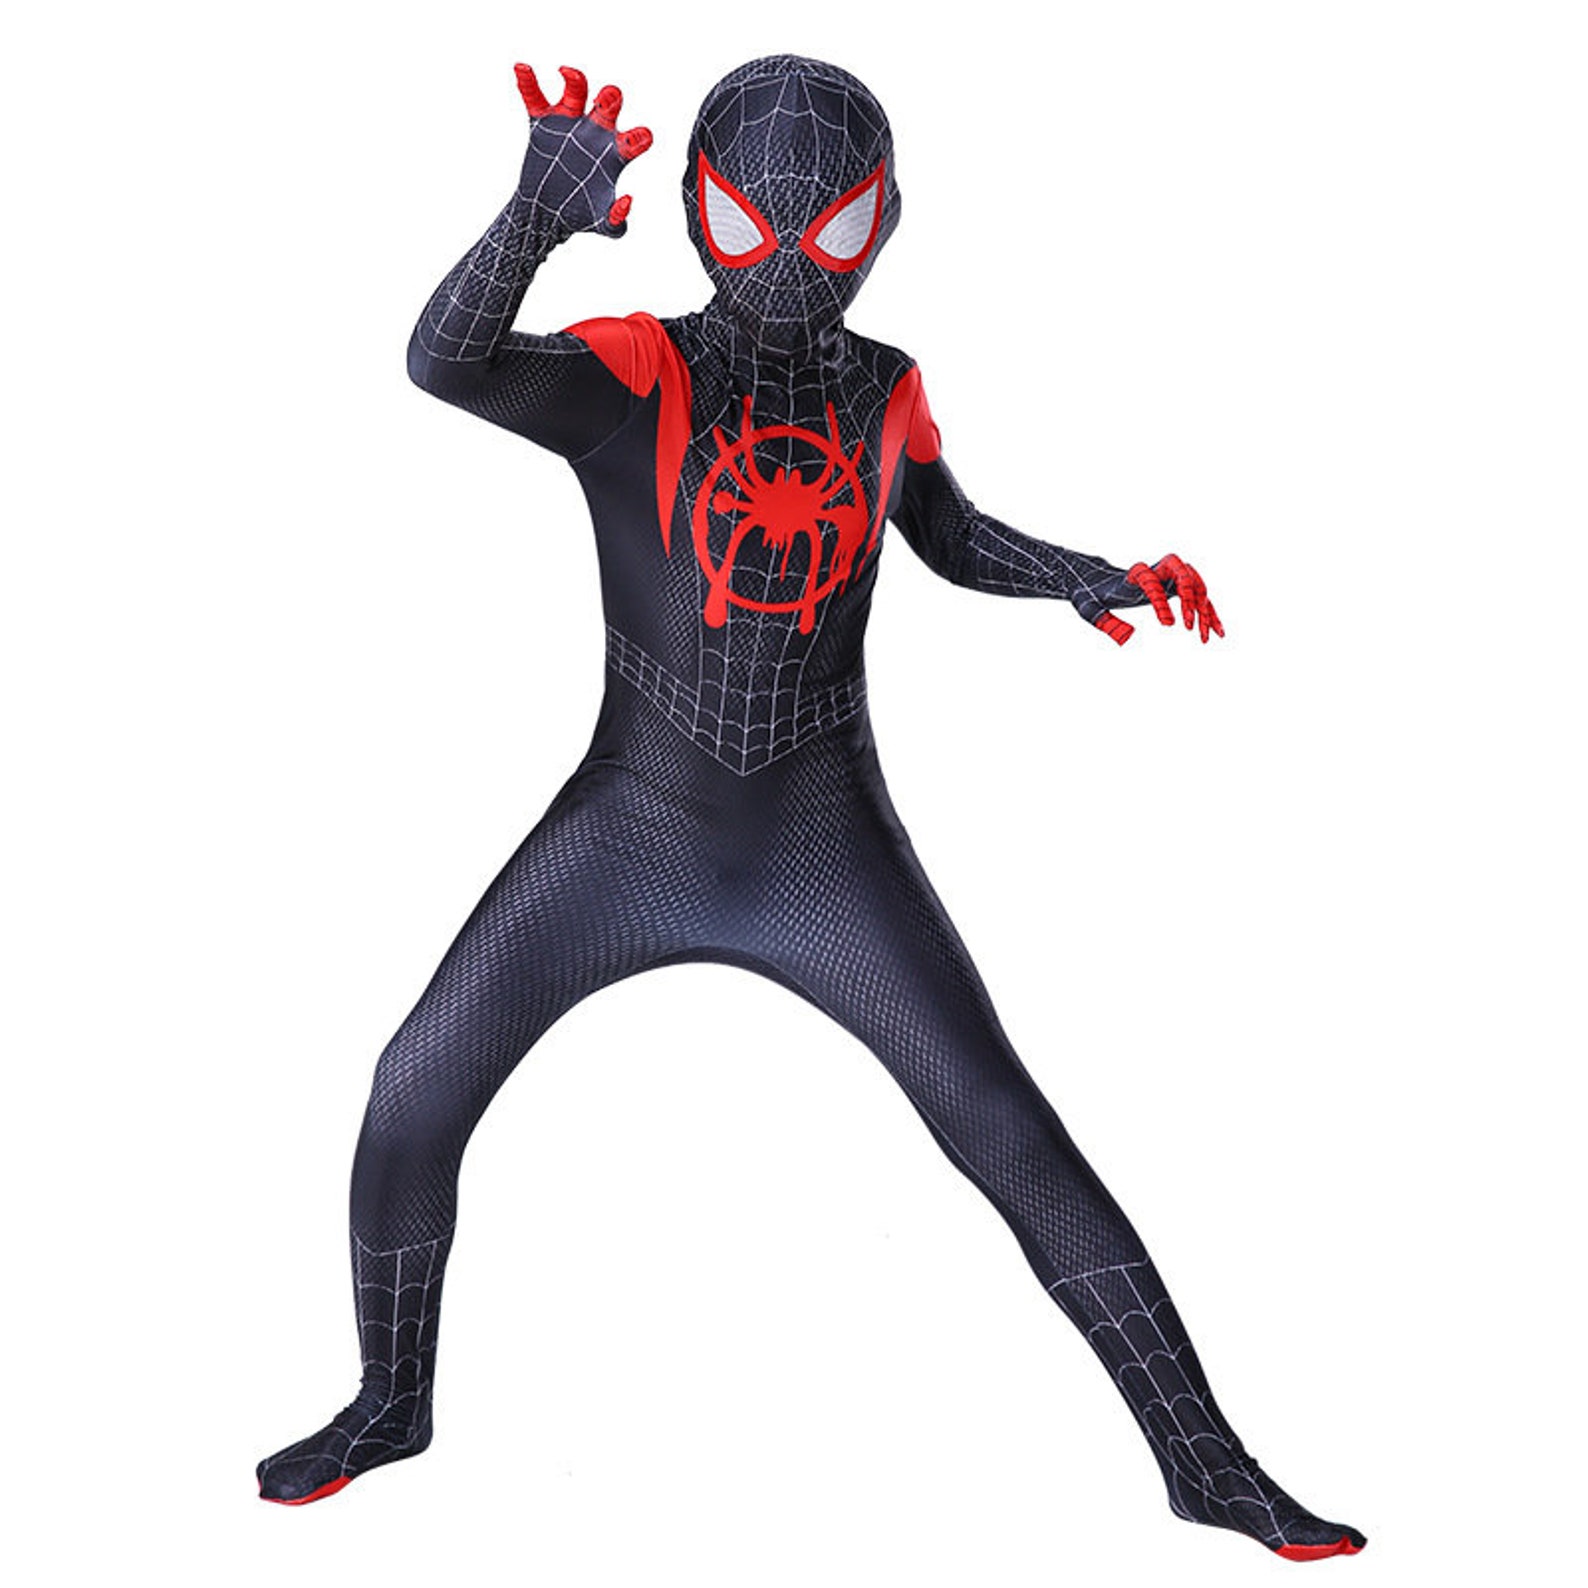 Black spider man costume Bimbo Spiderman 8 10 years Old | Etsy